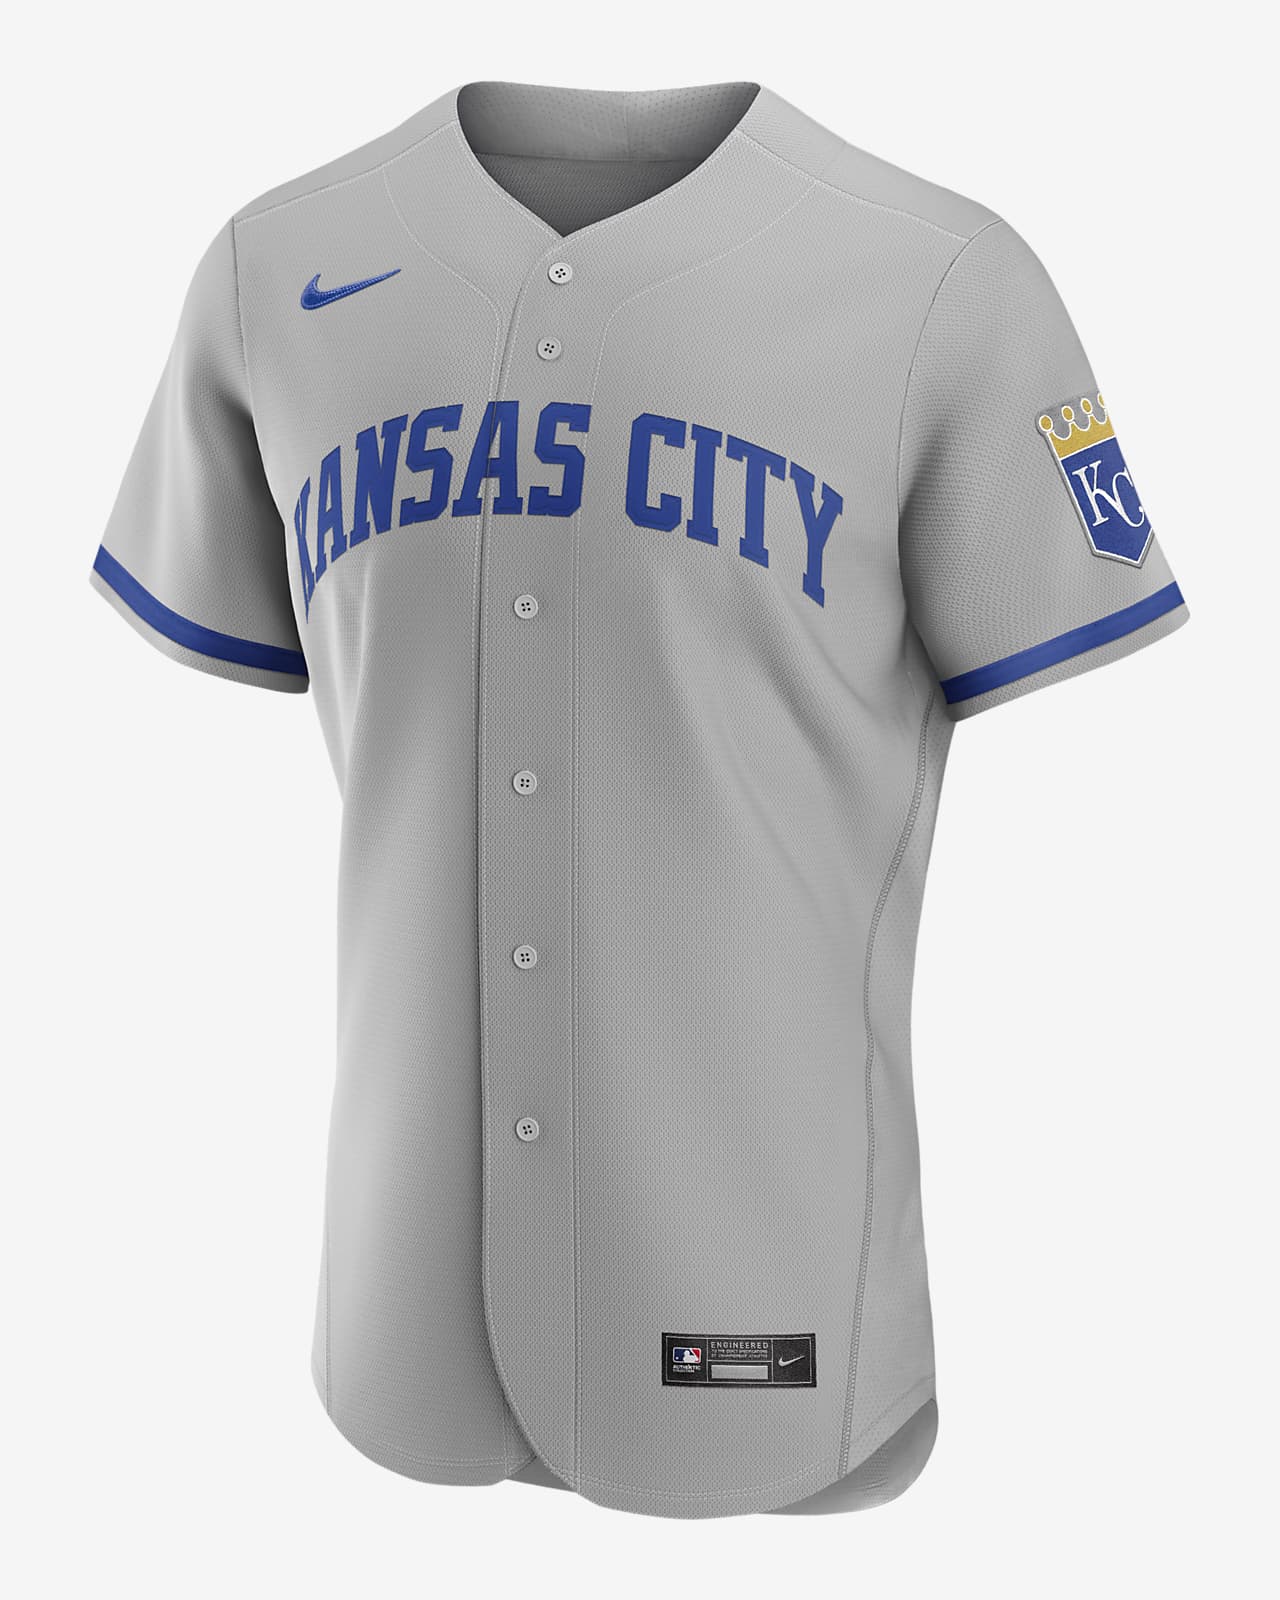 nike city baseball uniforms